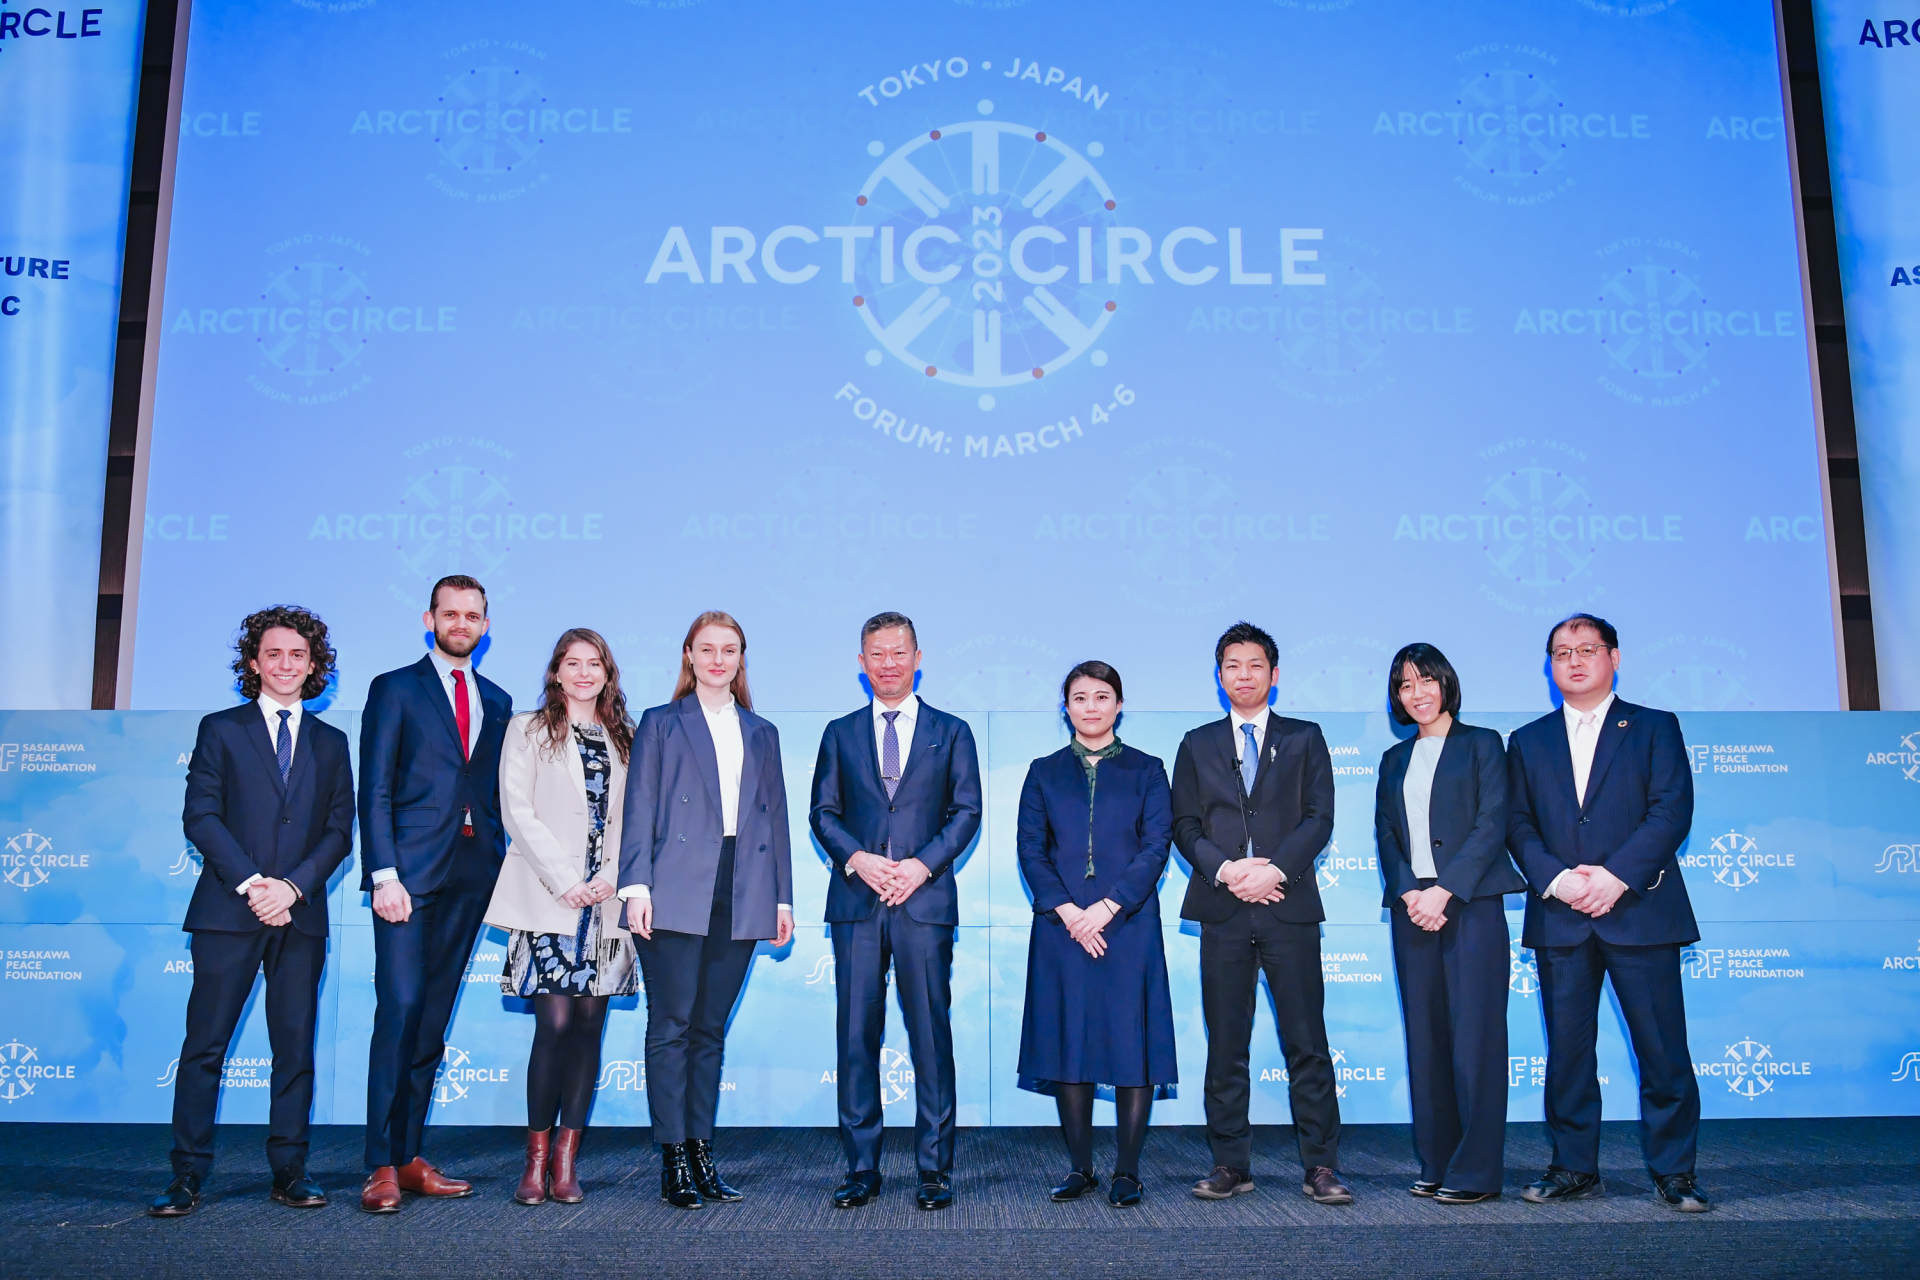 From left: Members of the Arctic Circle Secretariat, OPRI President Dr. Hide Sakaguchi, and other OPRI members